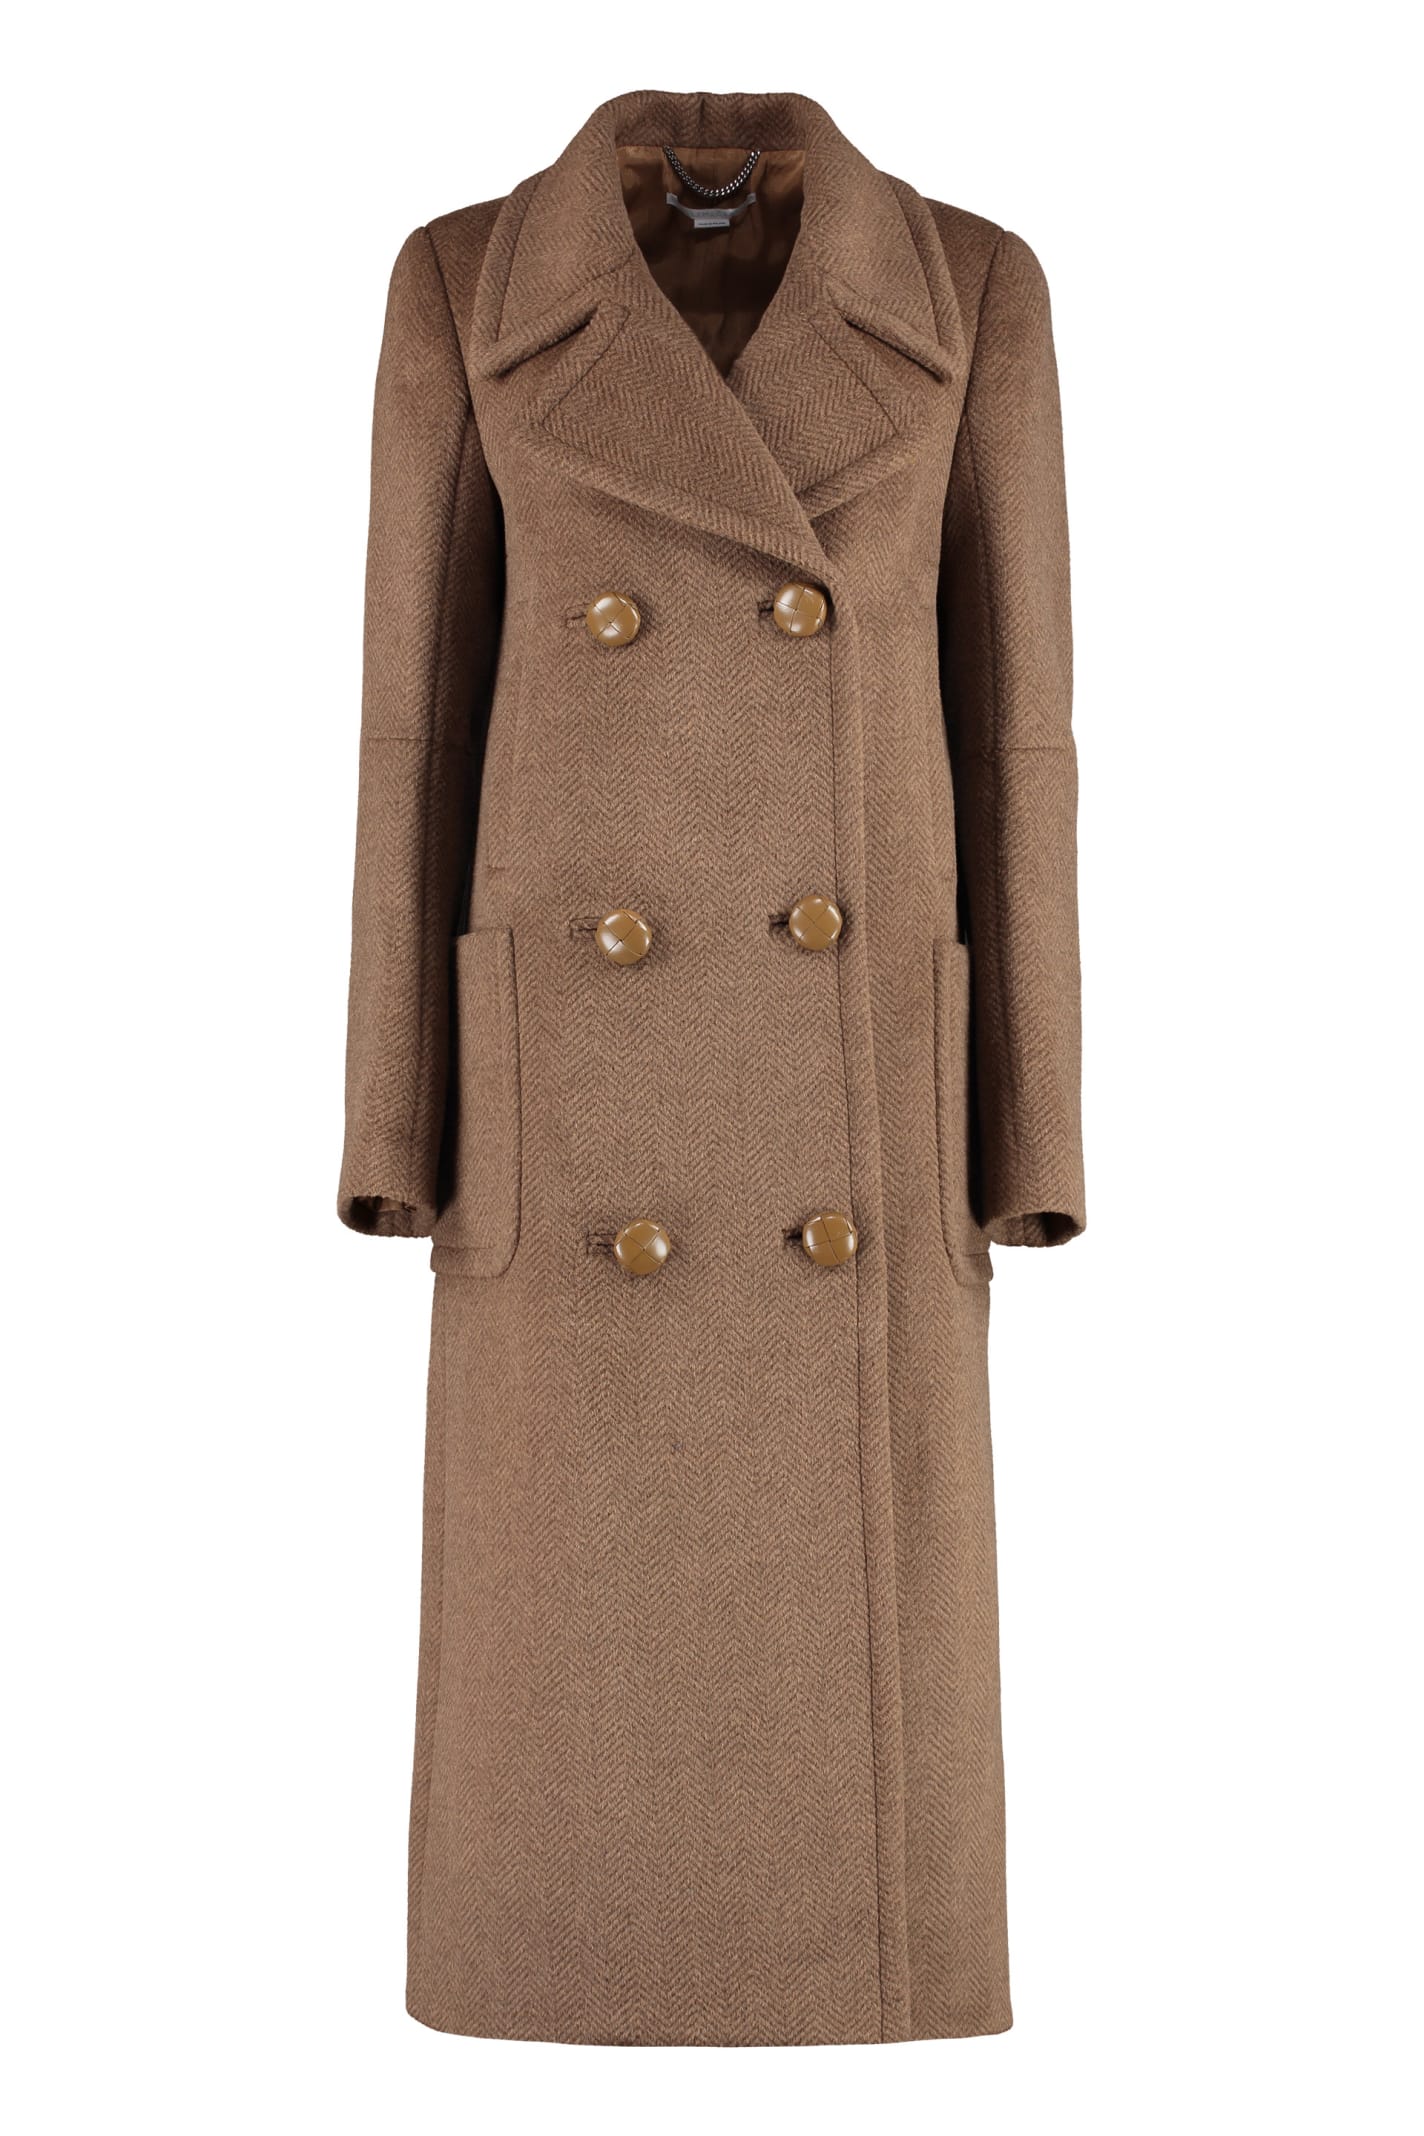 Stella McCartney Double-breasted Wool Coat